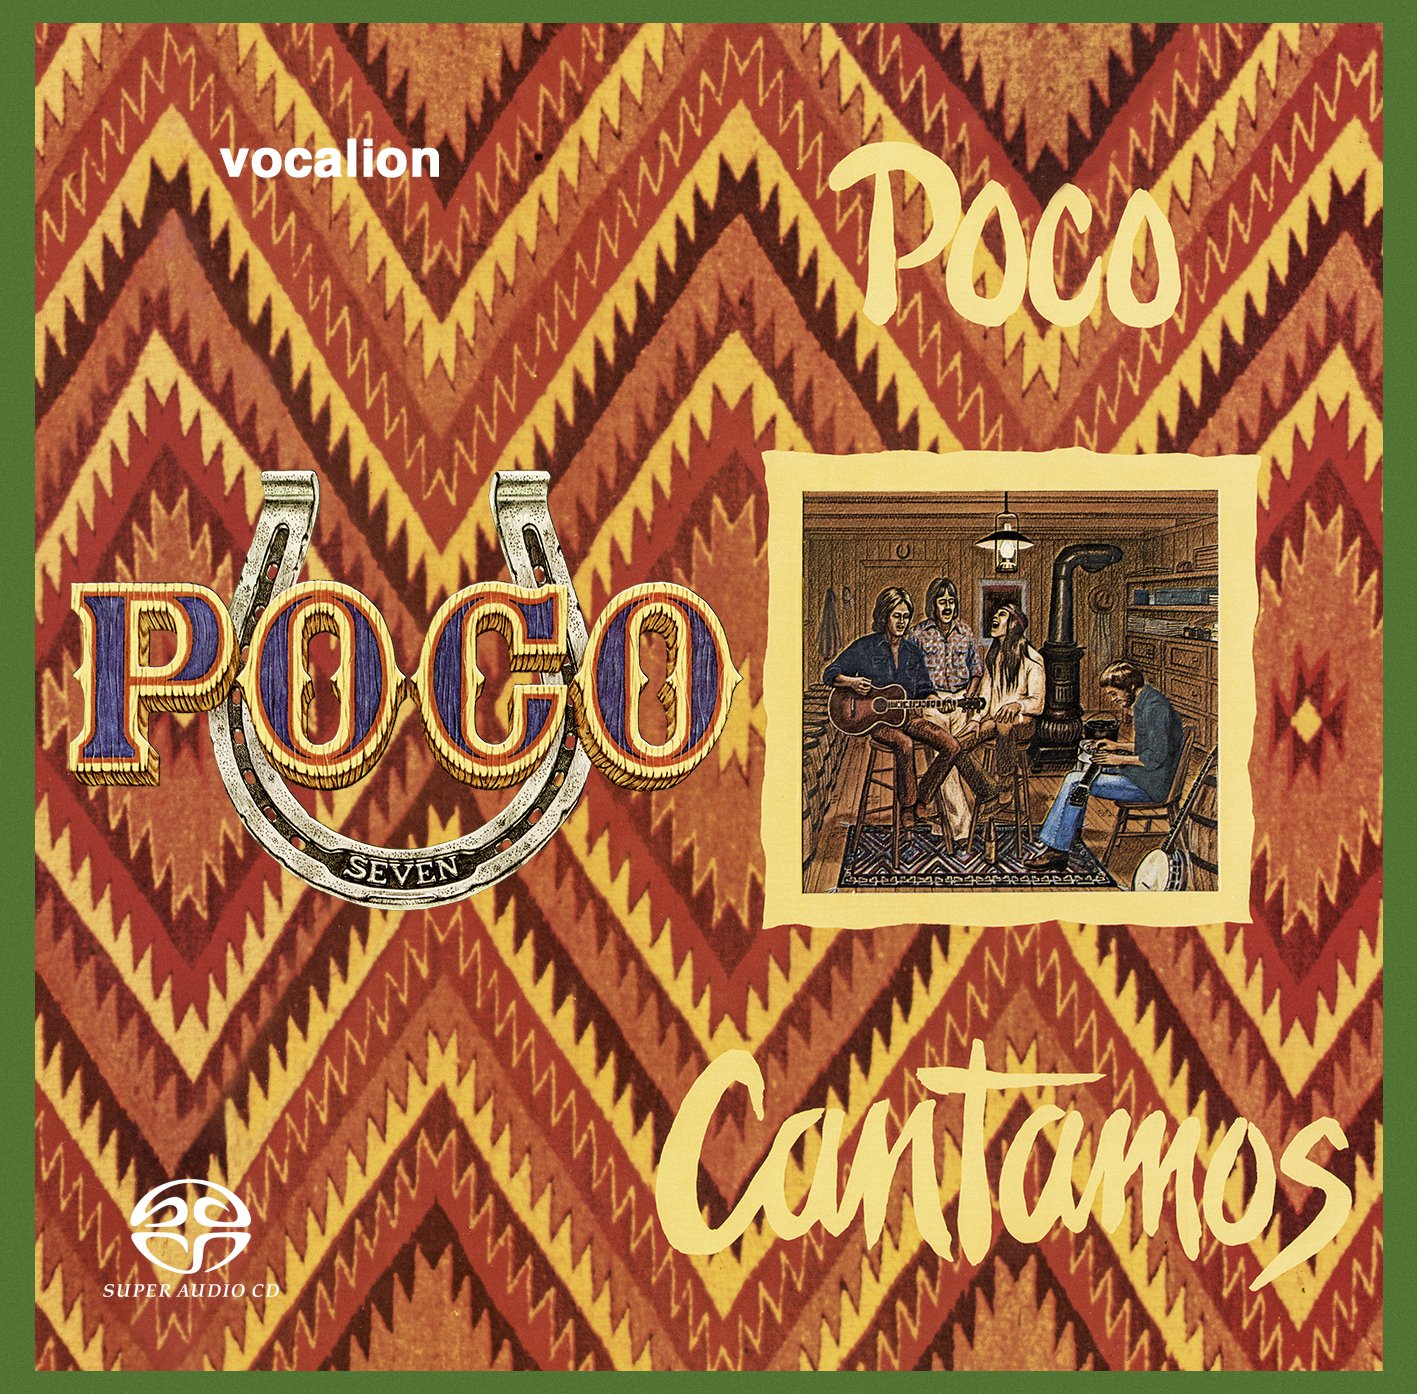 Poco – Cantamos & Seven (1974) [Reissue 2018] SACD ISO + FLAC 24bit/96kHz